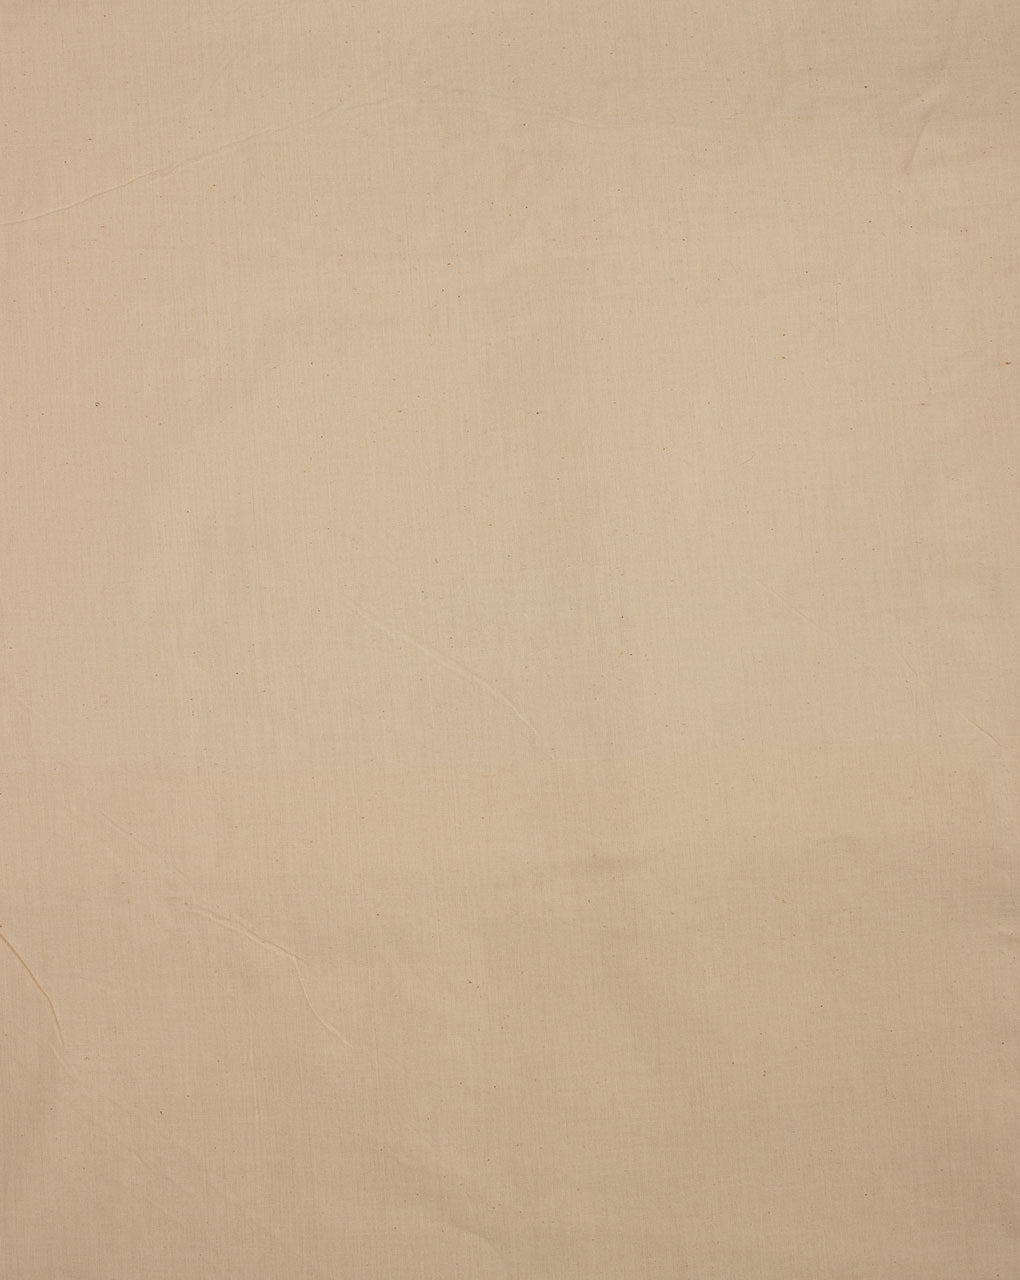 Greige Woven 100's Khadi Cotton Fabric - Fabriclore.com